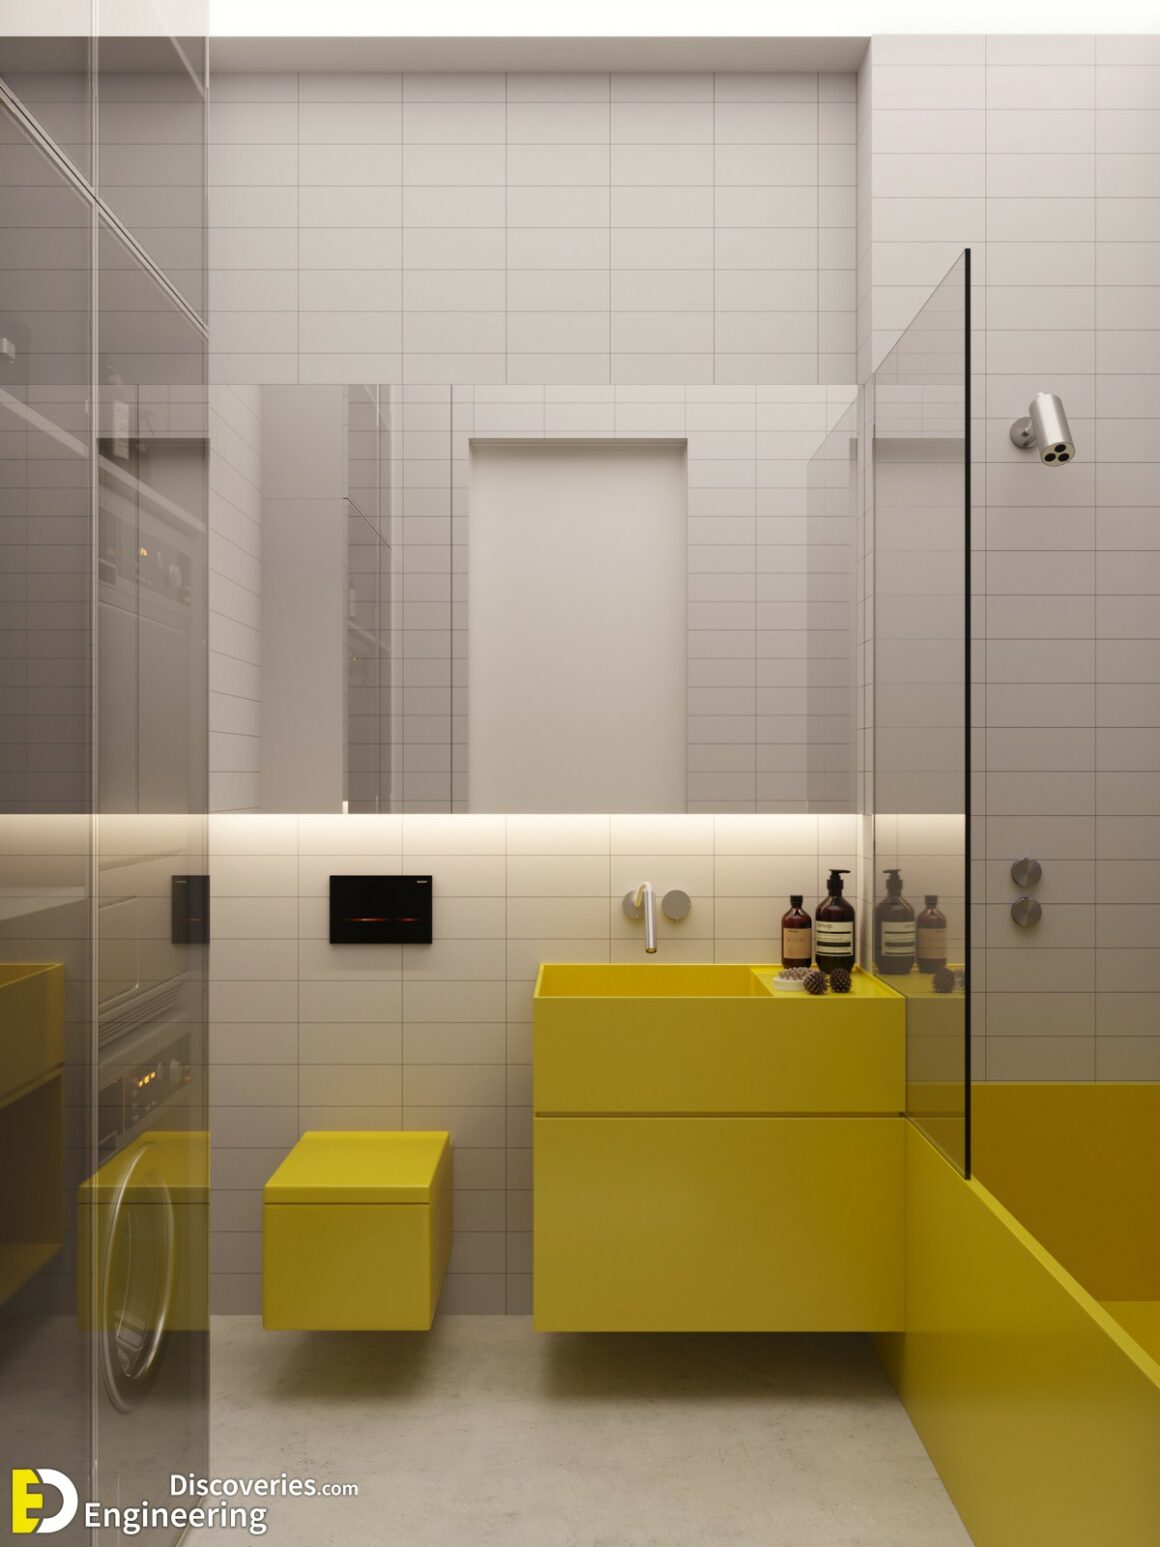 40 Most Popular Bathroom Design Ideas - Engineering Discoveries